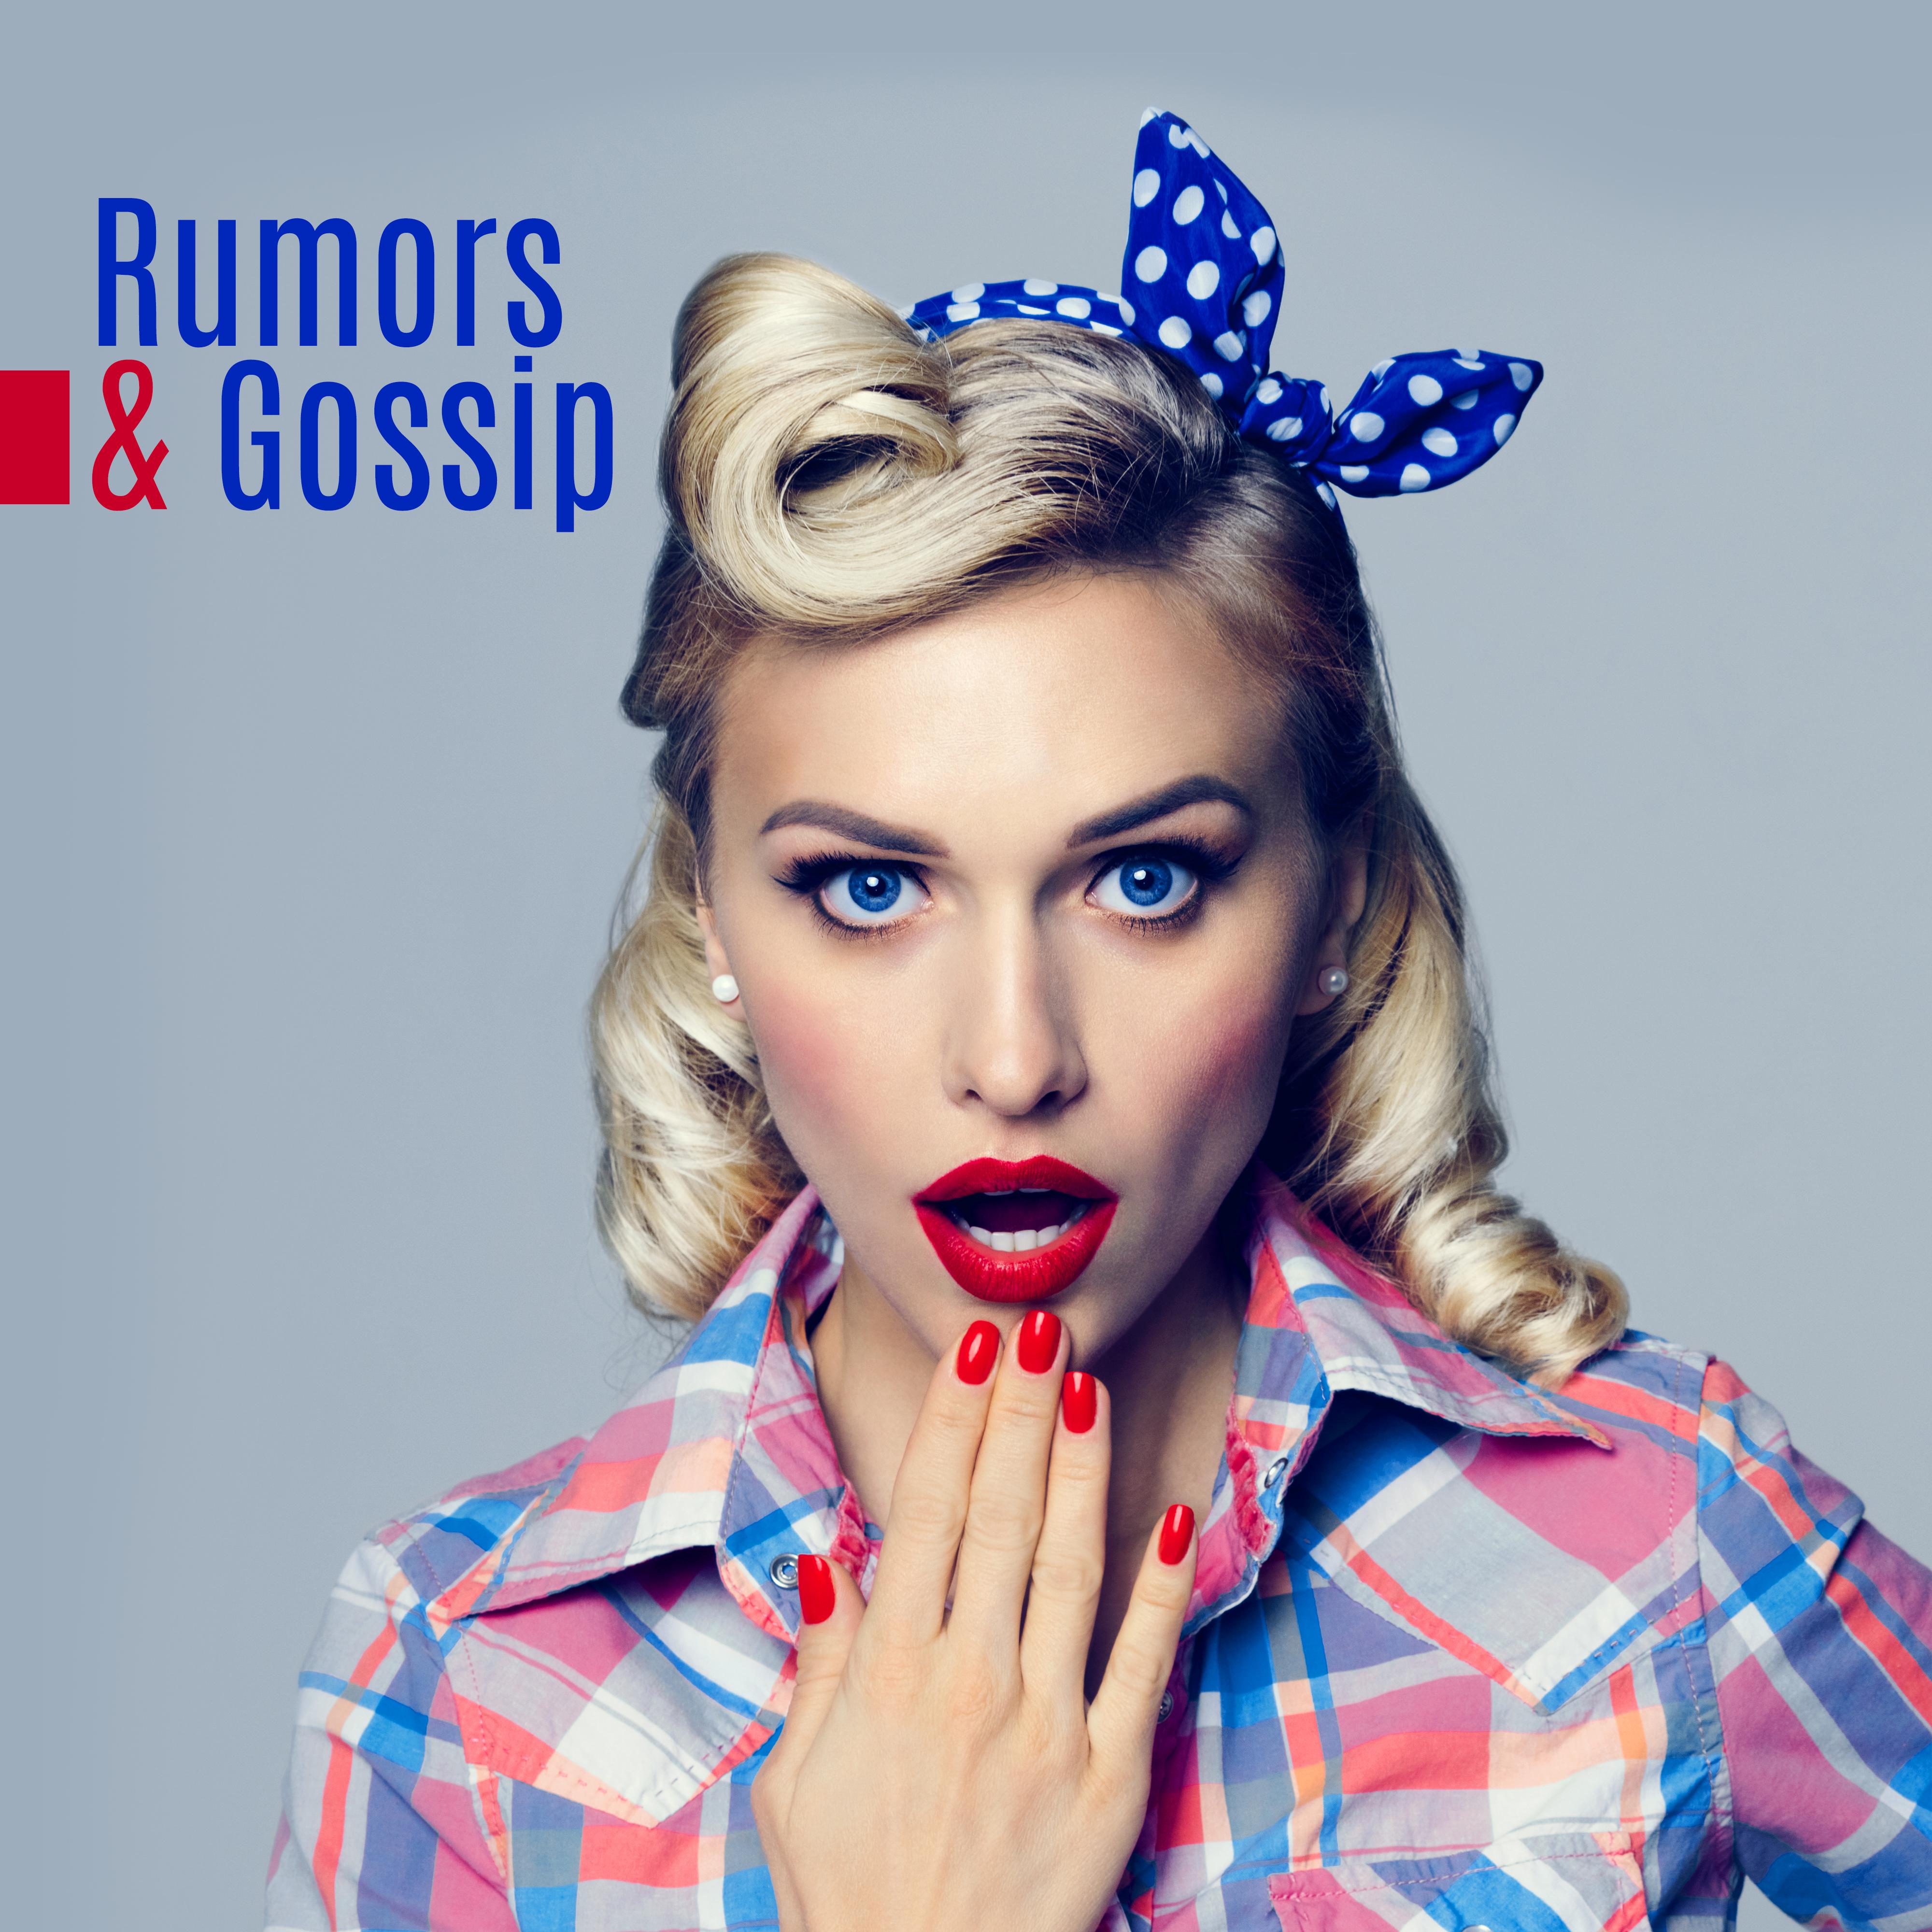 Rumors & Gossip: Music for Conversations, Little Talks and Gossip